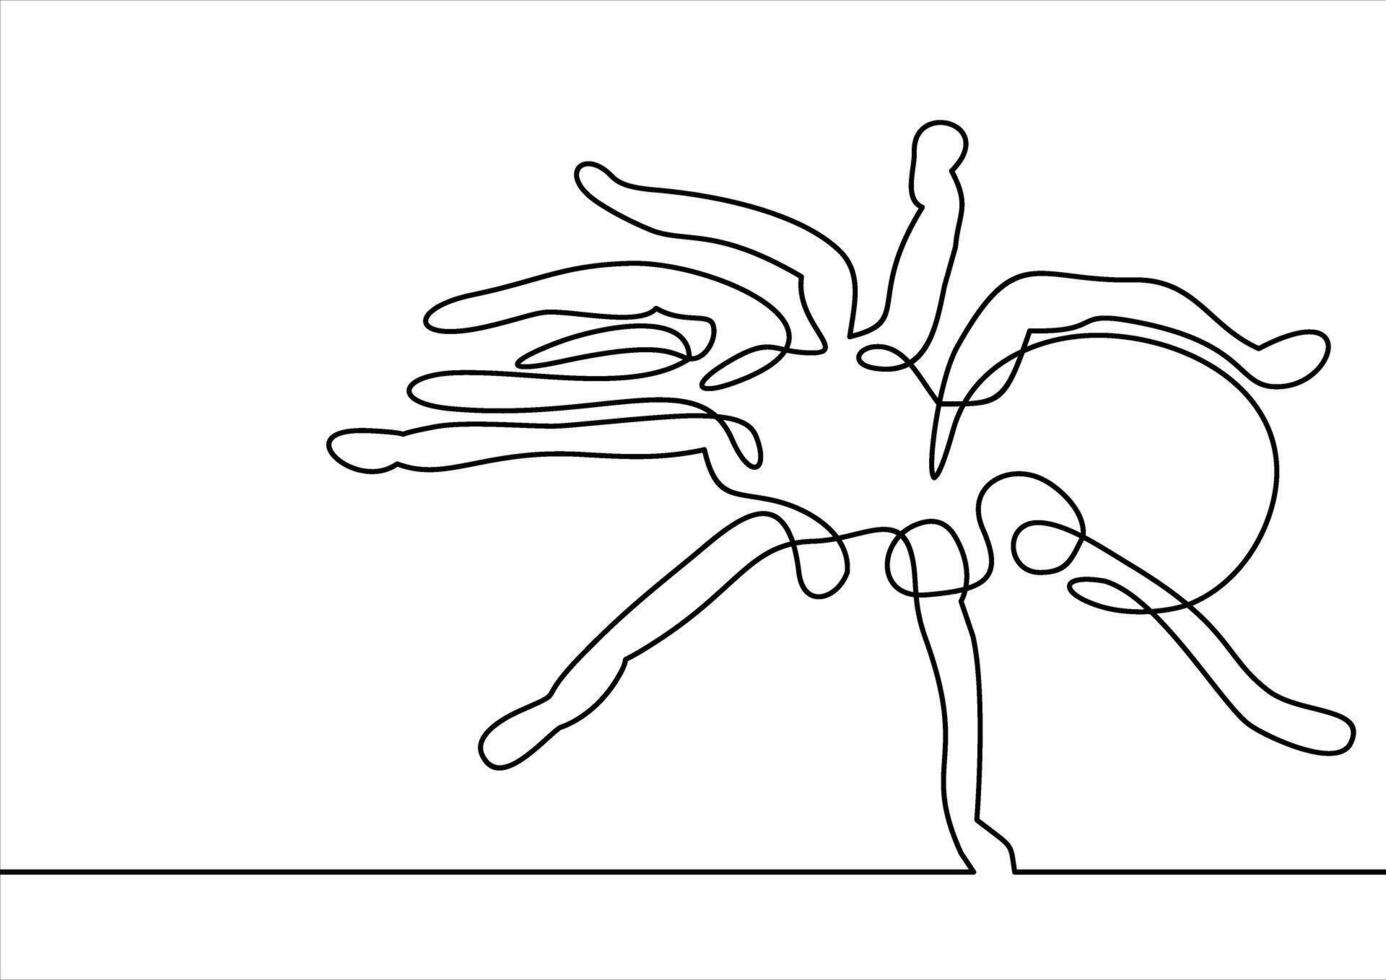 spin tarantula vector -continu lijn tekening